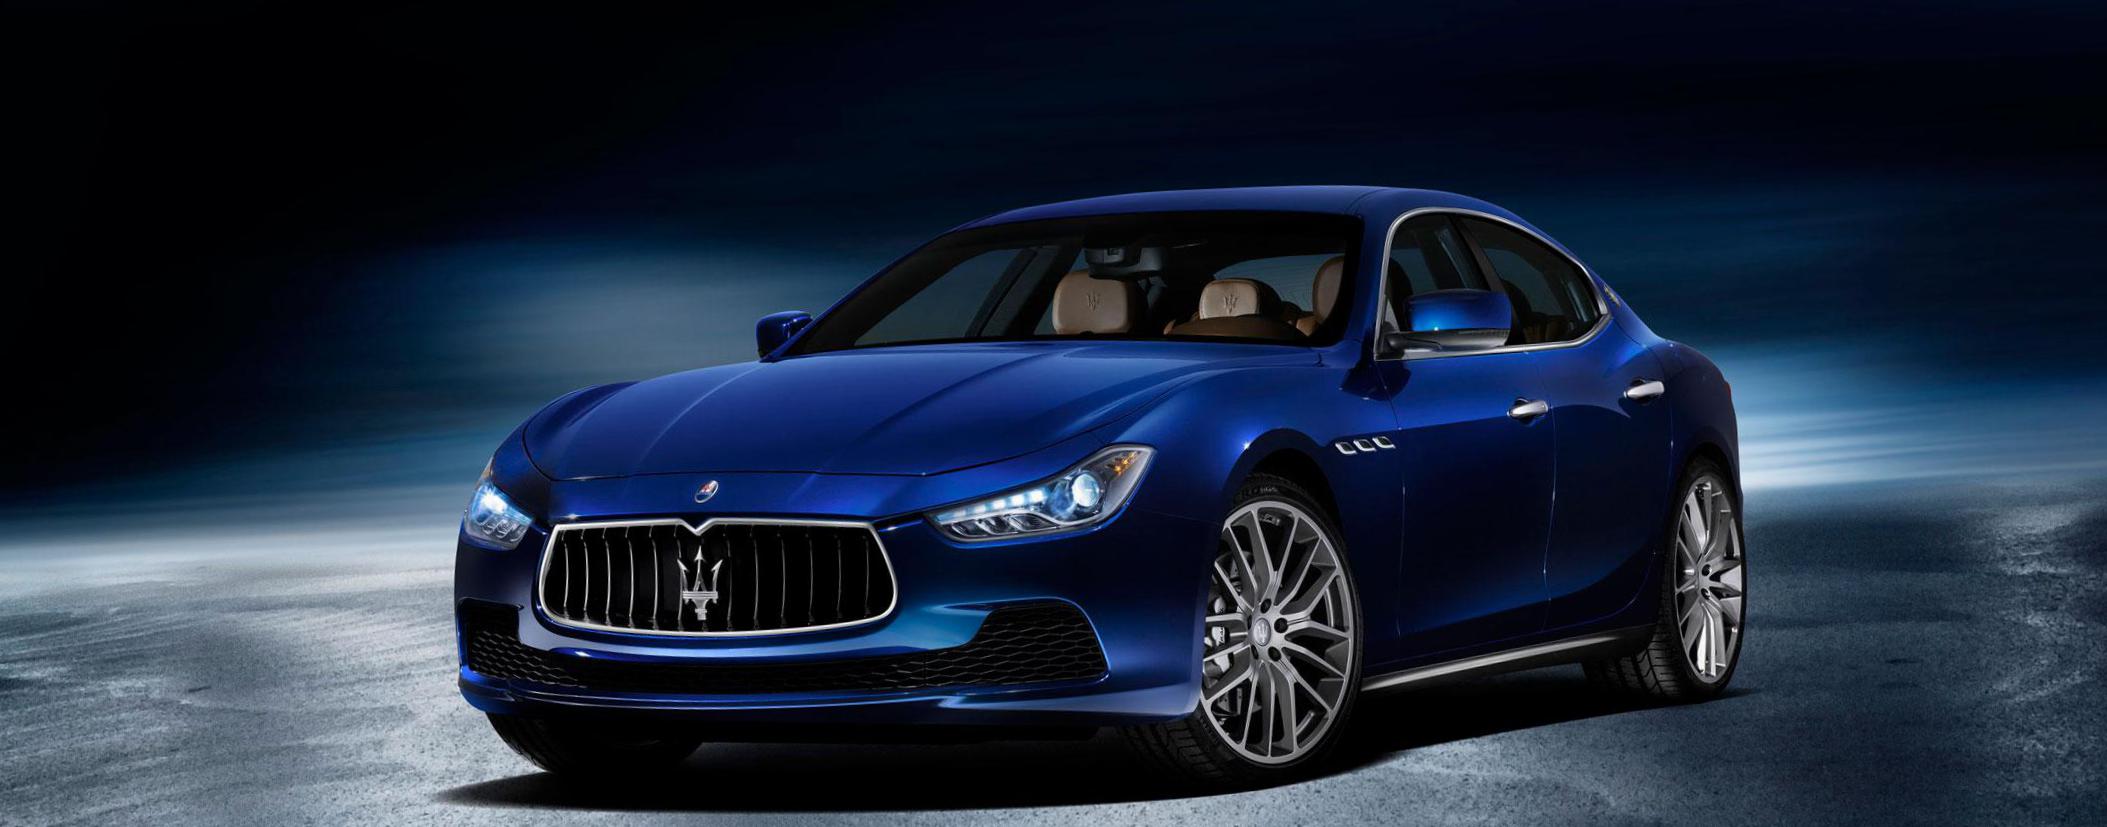 Ghibli Maserati approved 2013